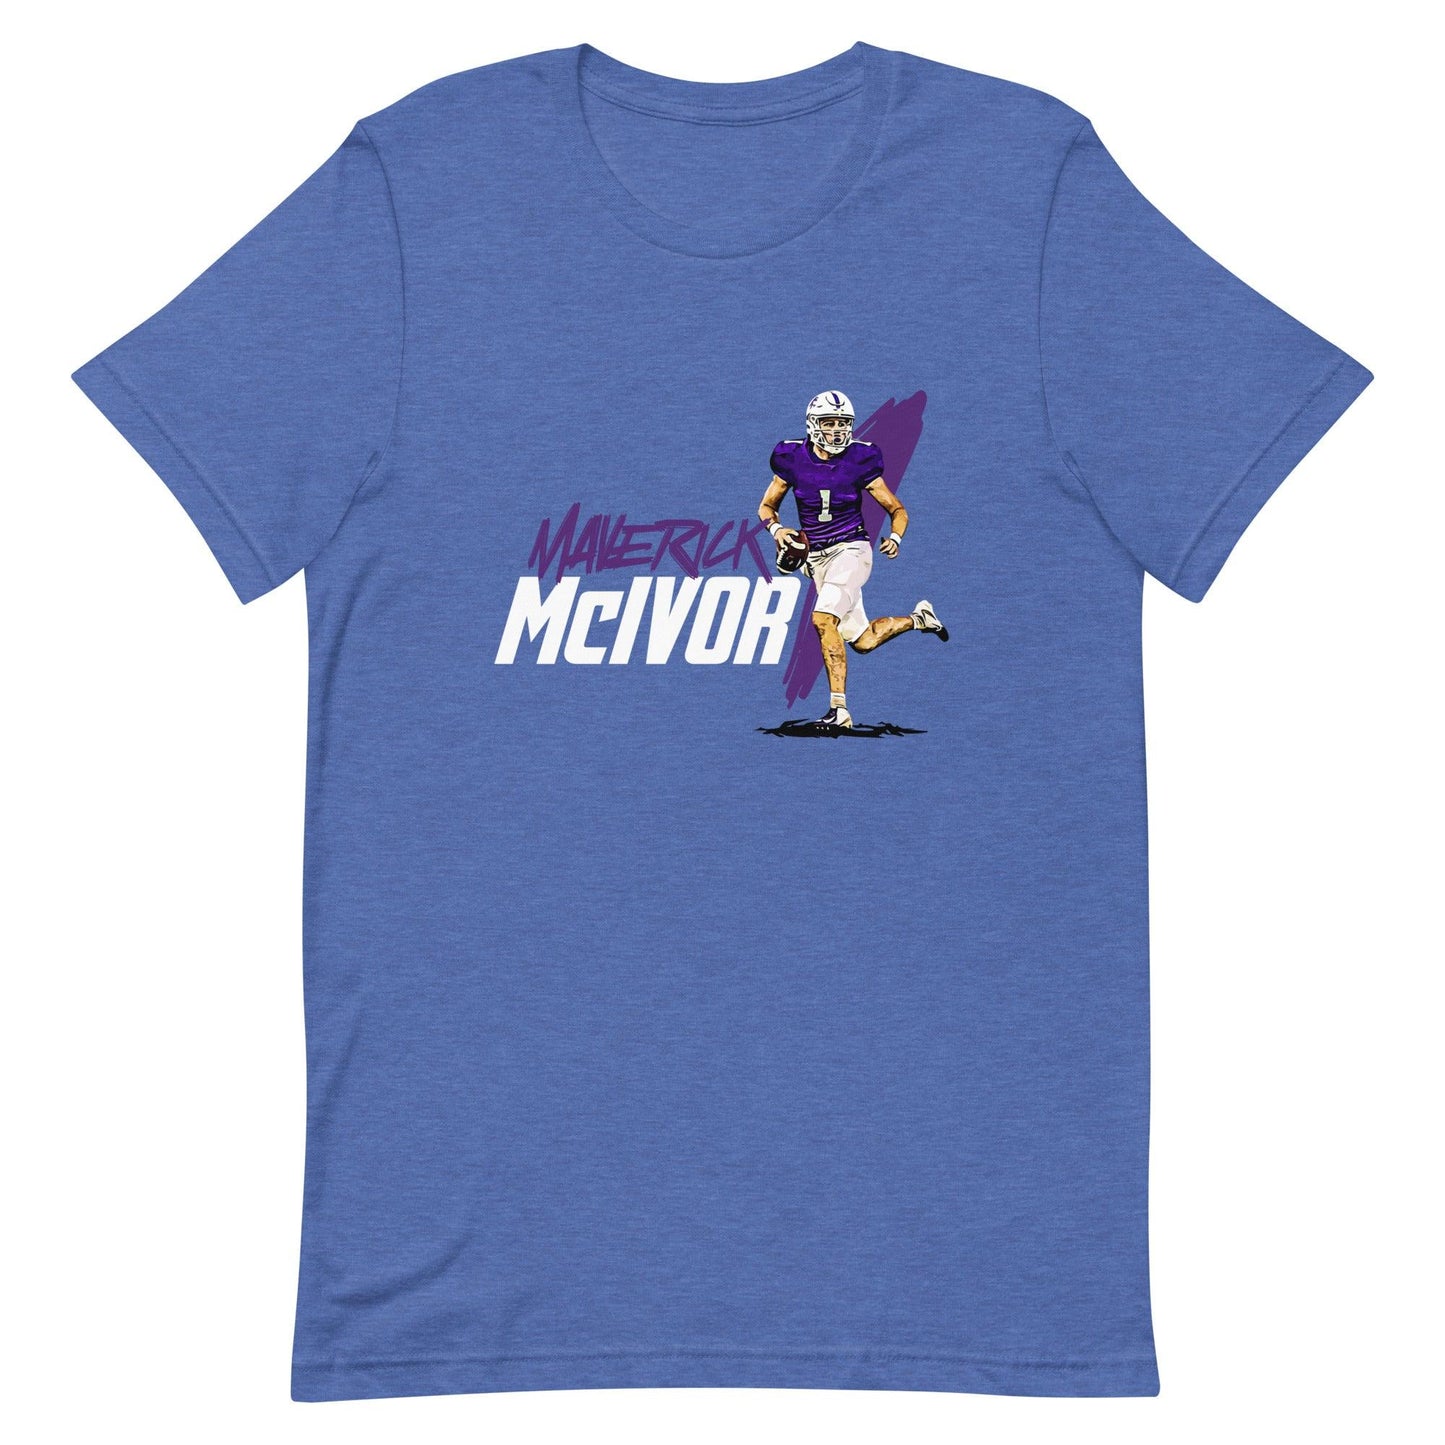 Maverick McIvor "Gameday" t-shirt - Fan Arch